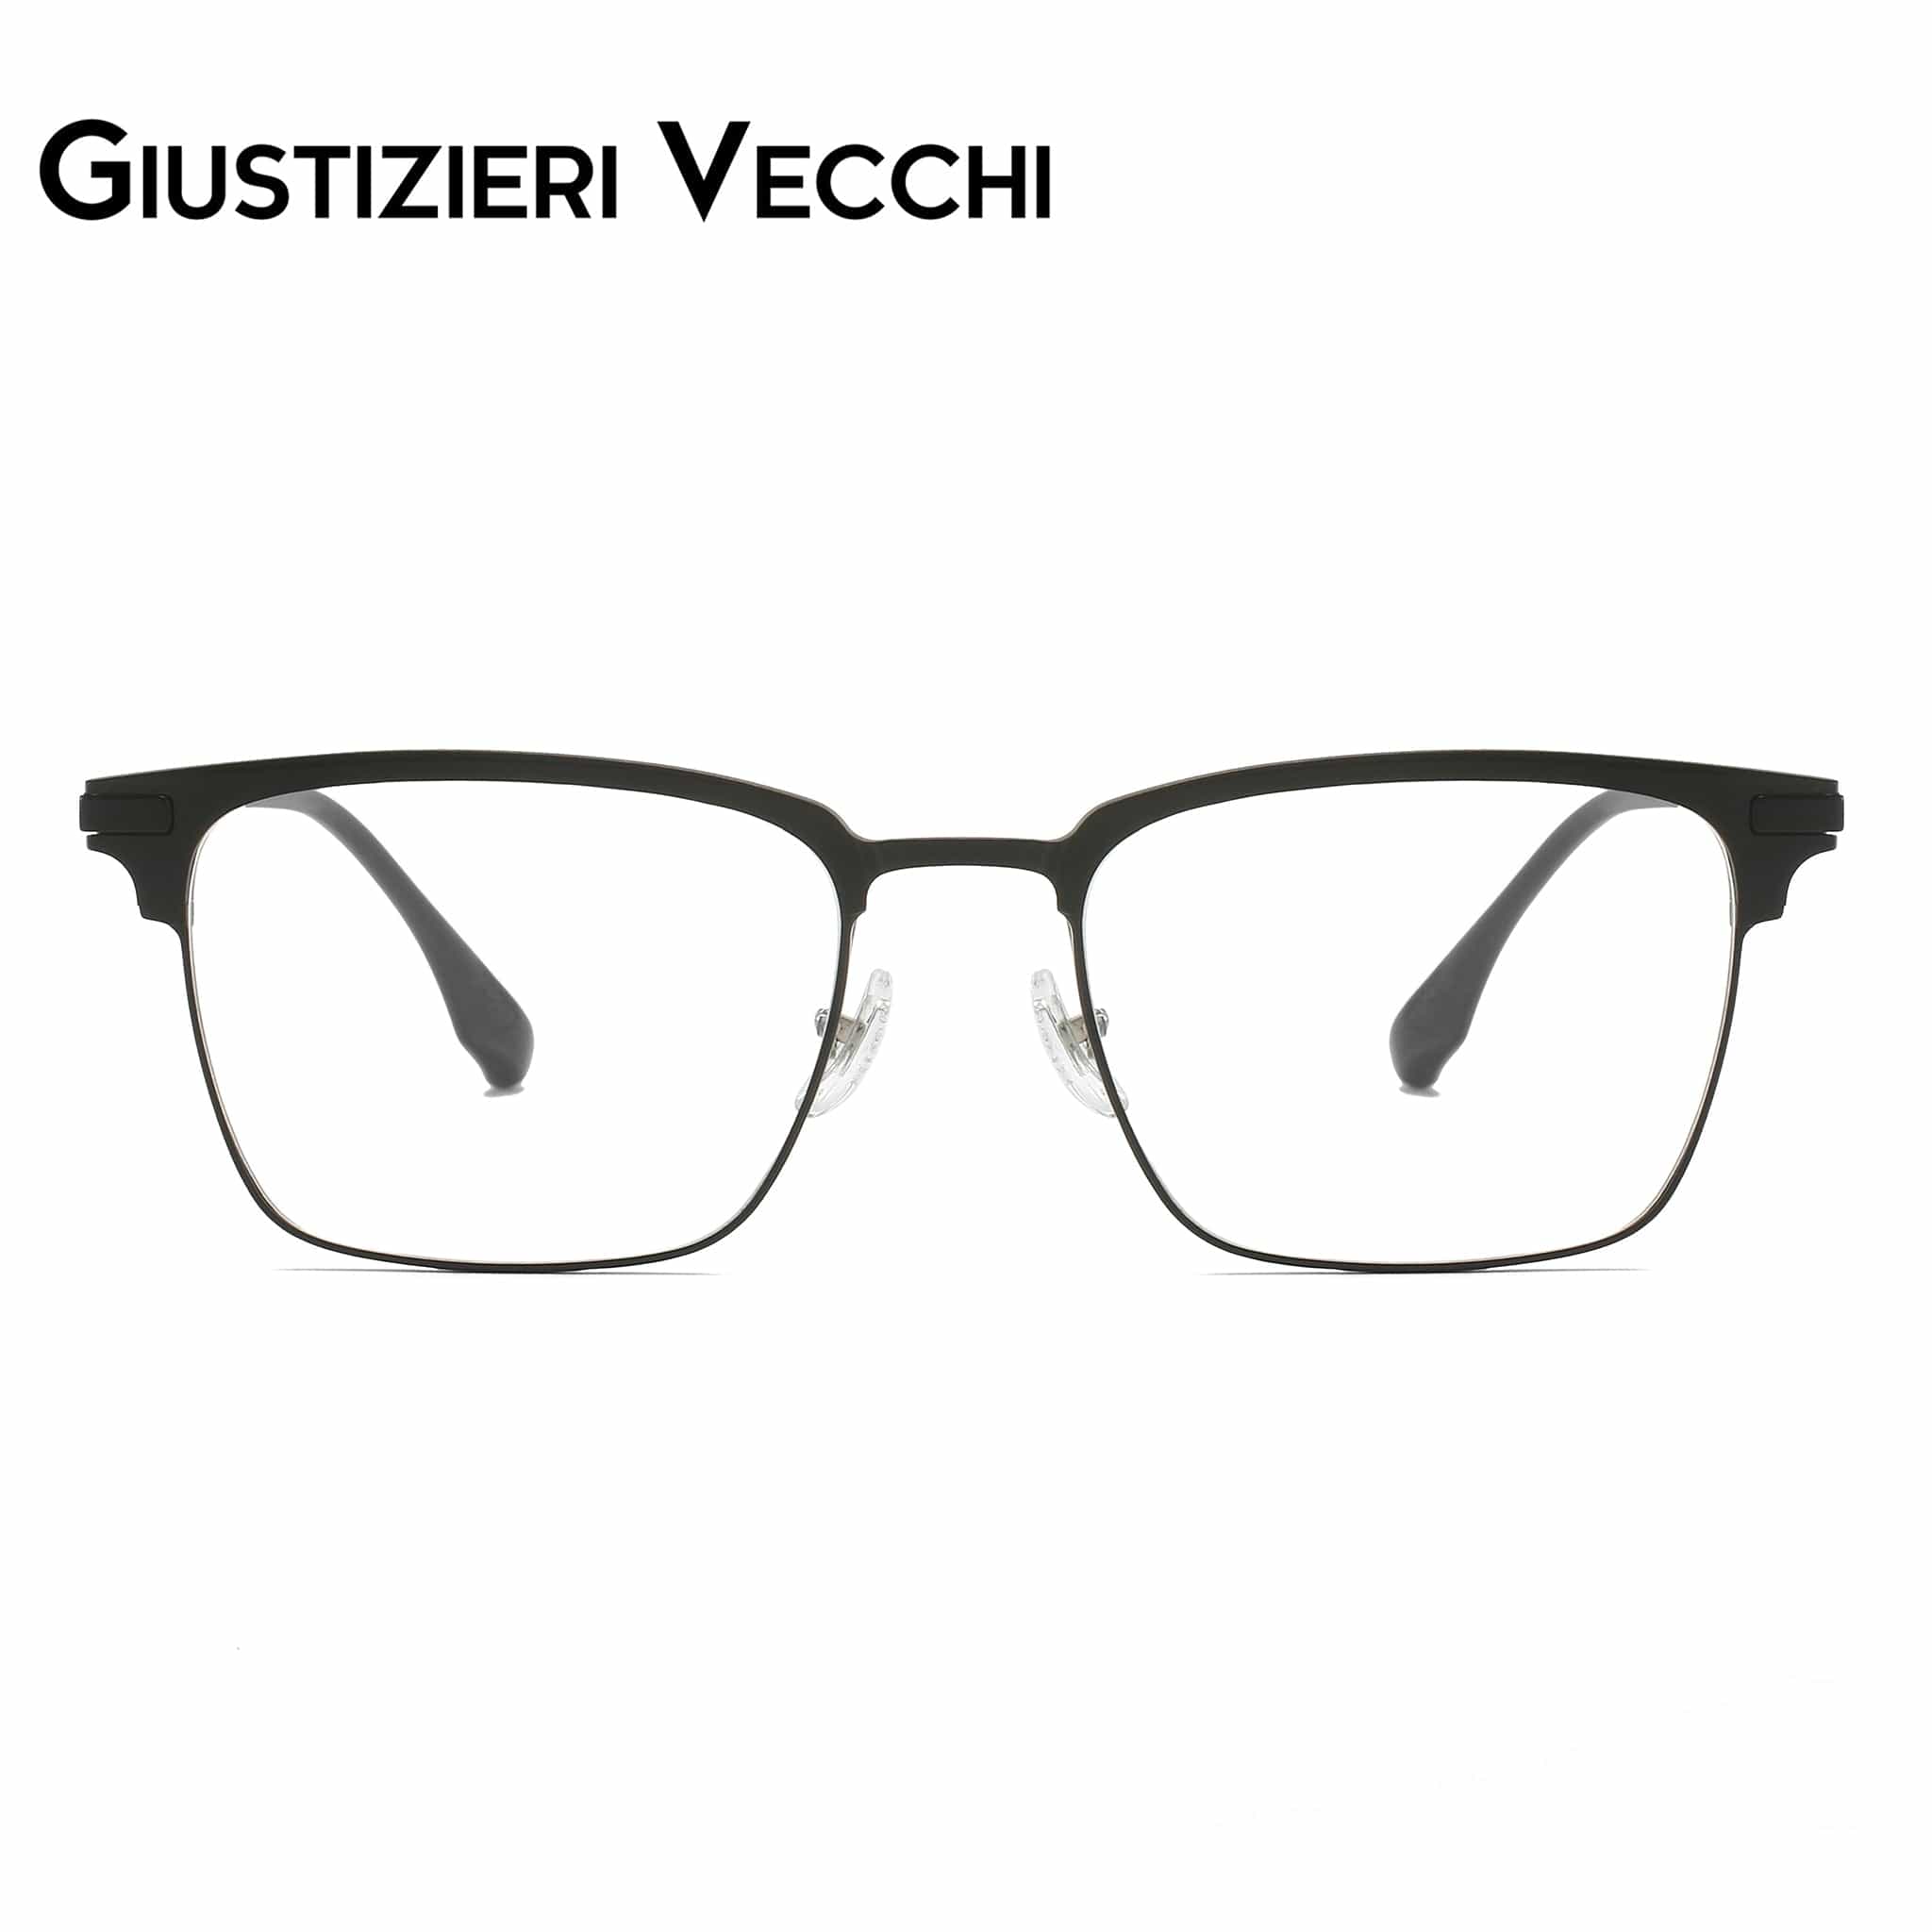 GIUSTIZIERI VECCHI Eyeglasses Medium / Black Wildflower Uno